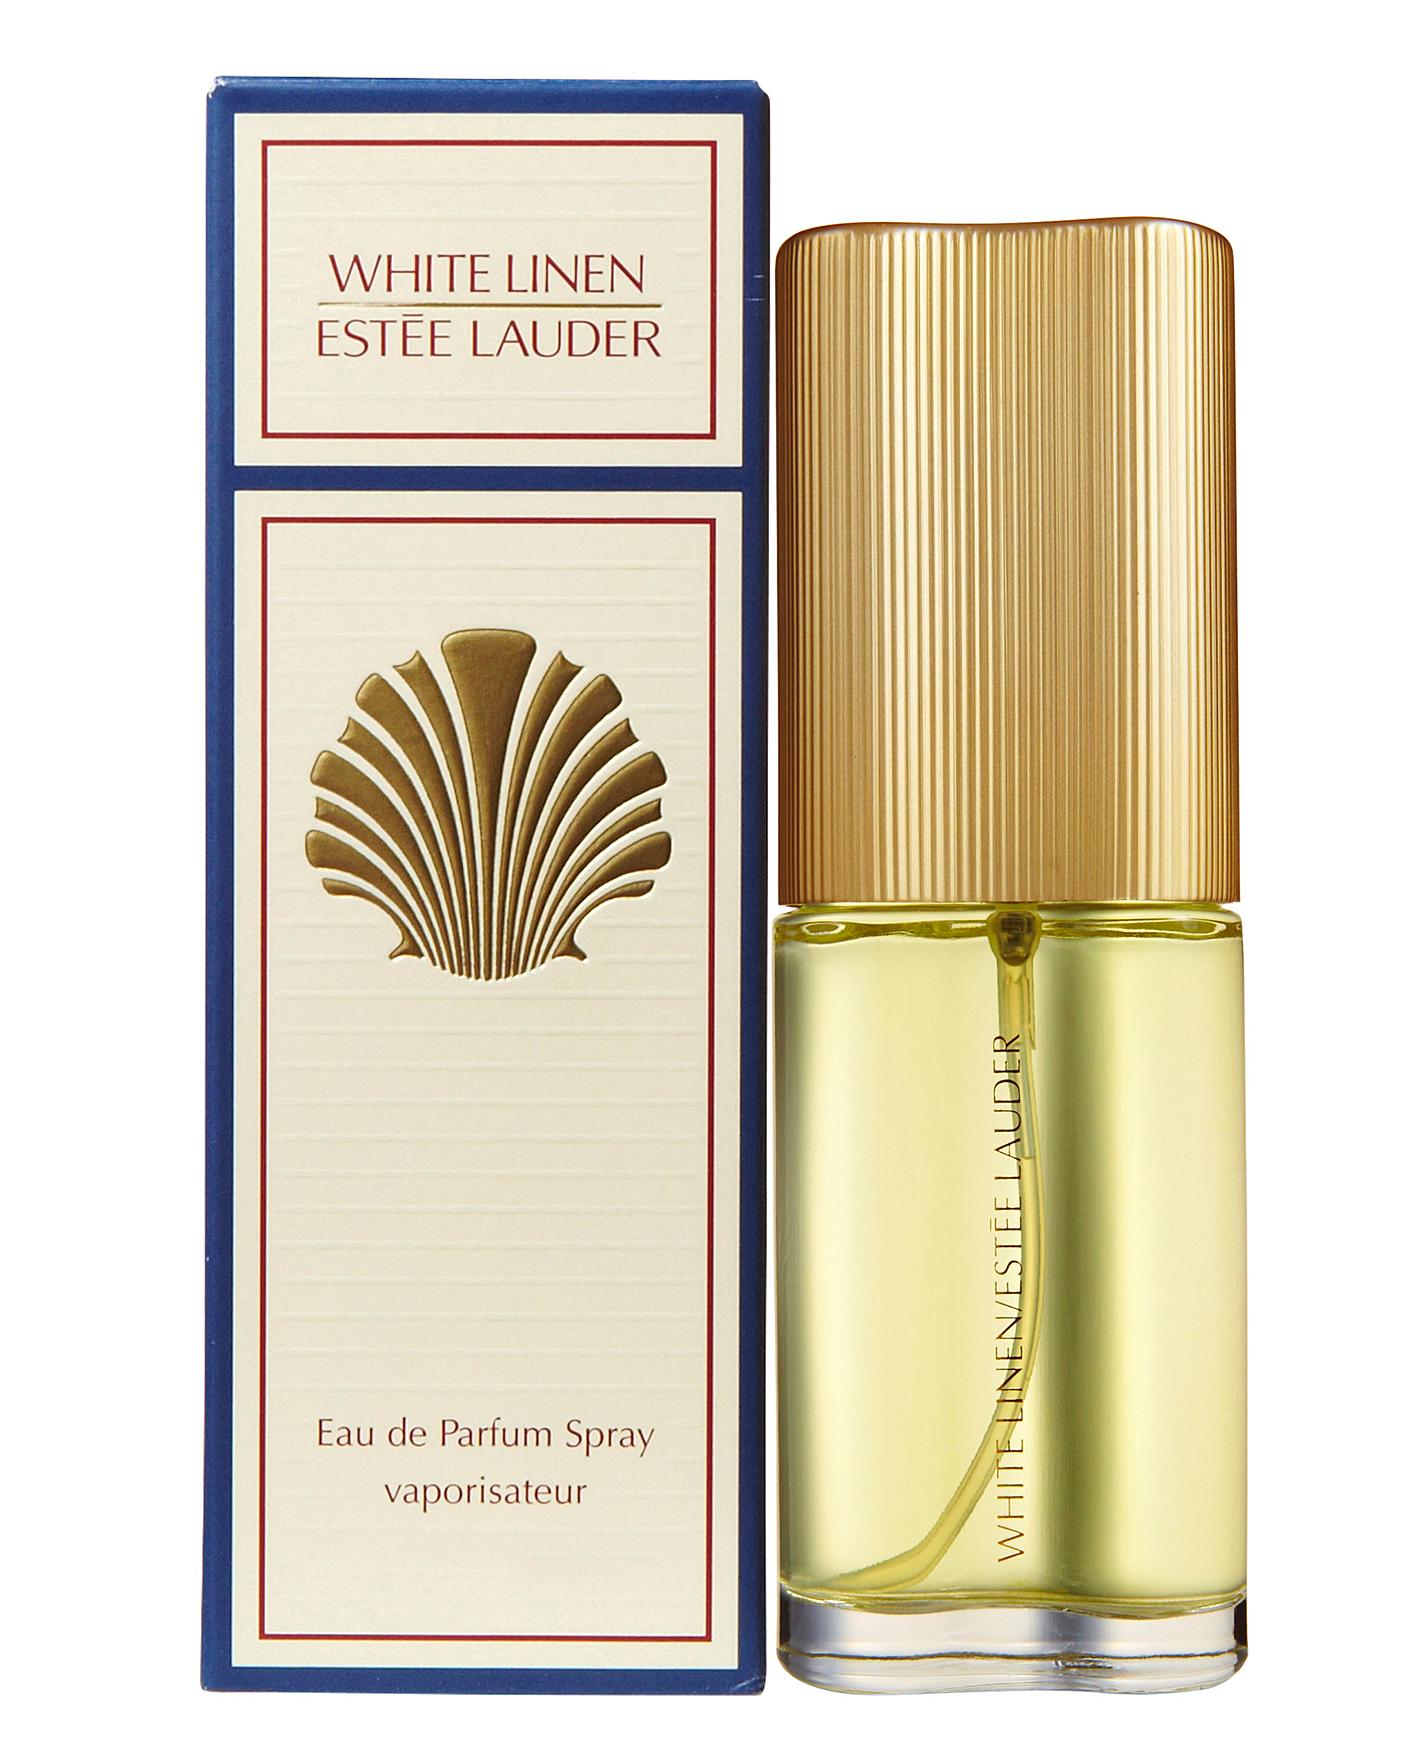 white linen perfume